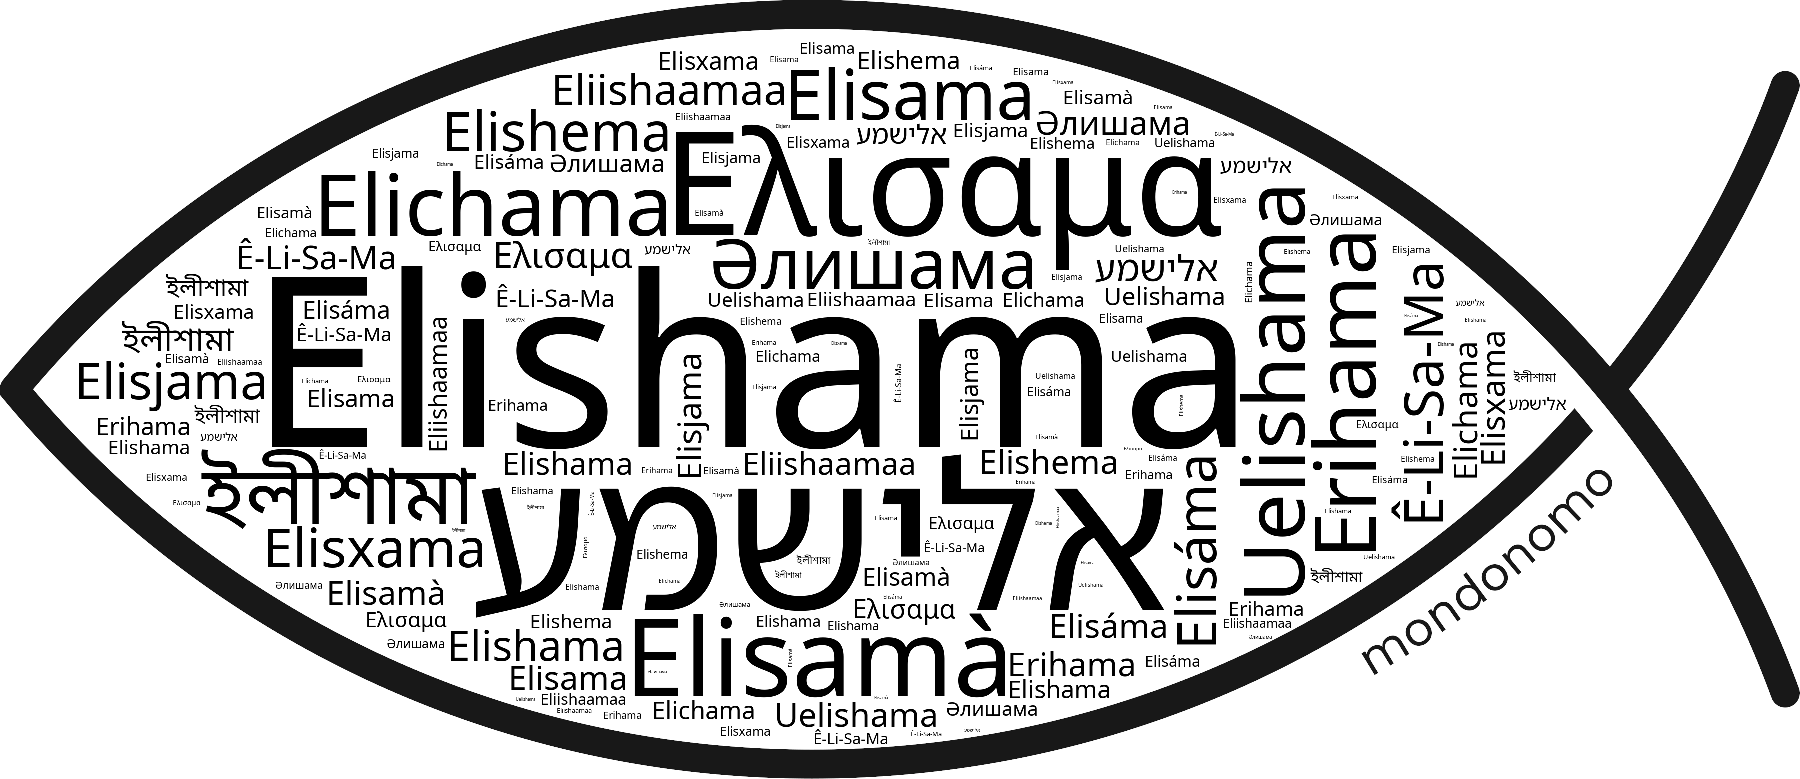 Name Elishama in the world's Bibles